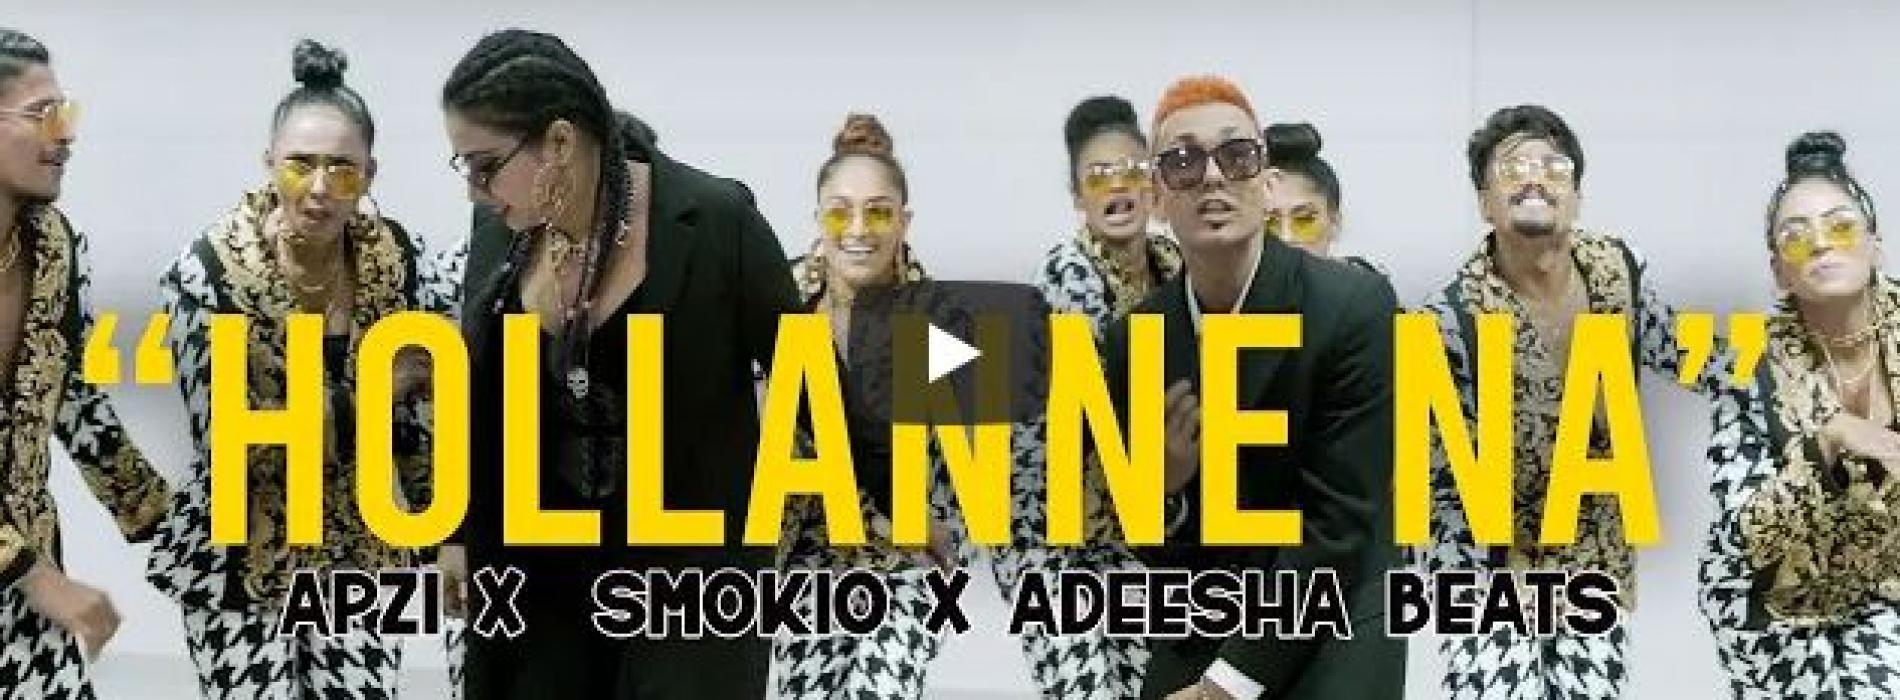 New Music : Apzi – Hollanna Na Ft Smokio & Adeesha Beats (Official Music Video)